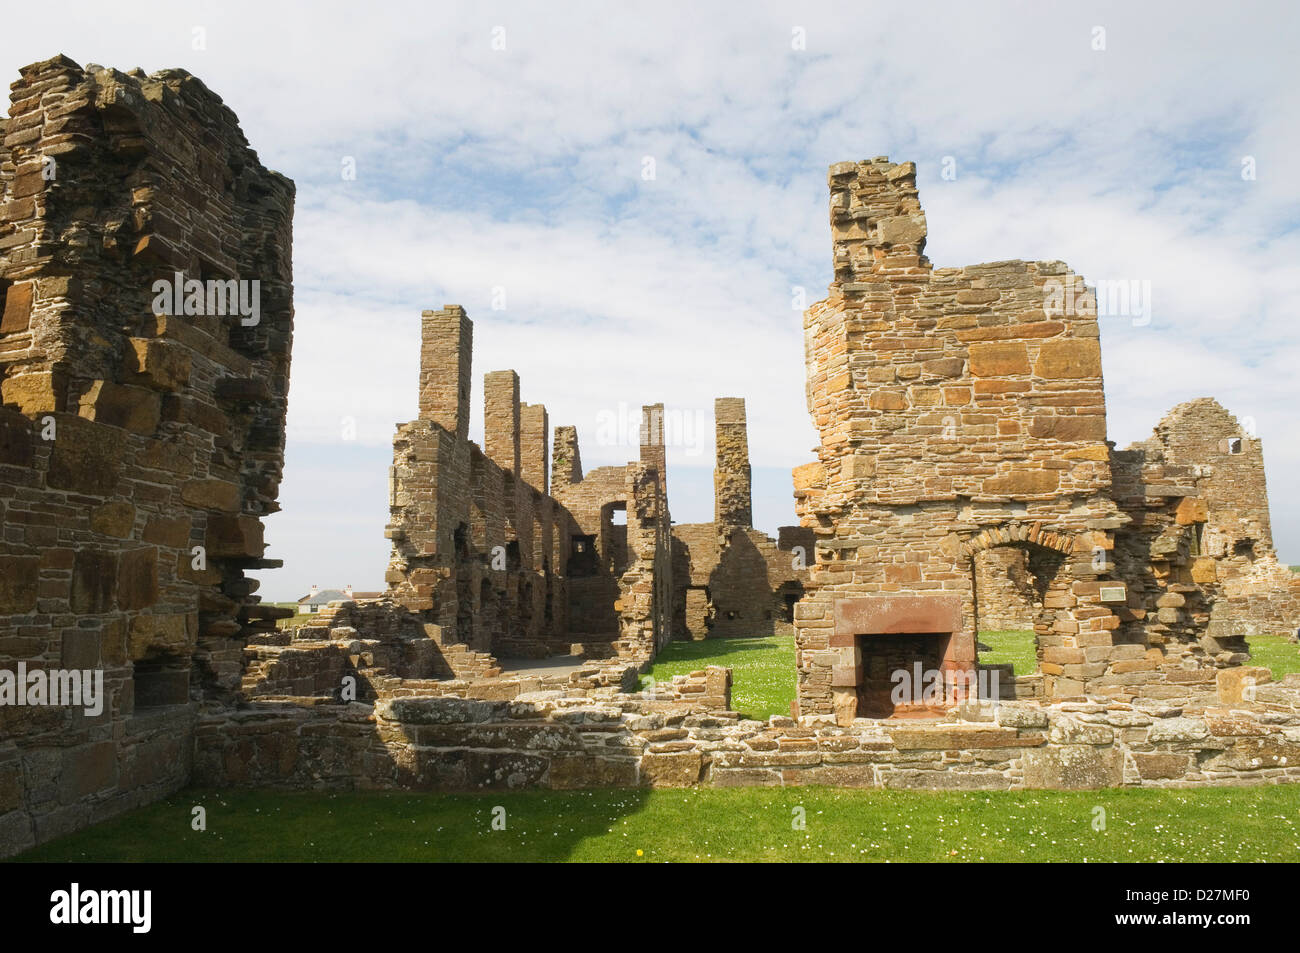 Die Ruinen des Earls Palace, Birsay, Orkney Inseln, Schottland. Stockfoto